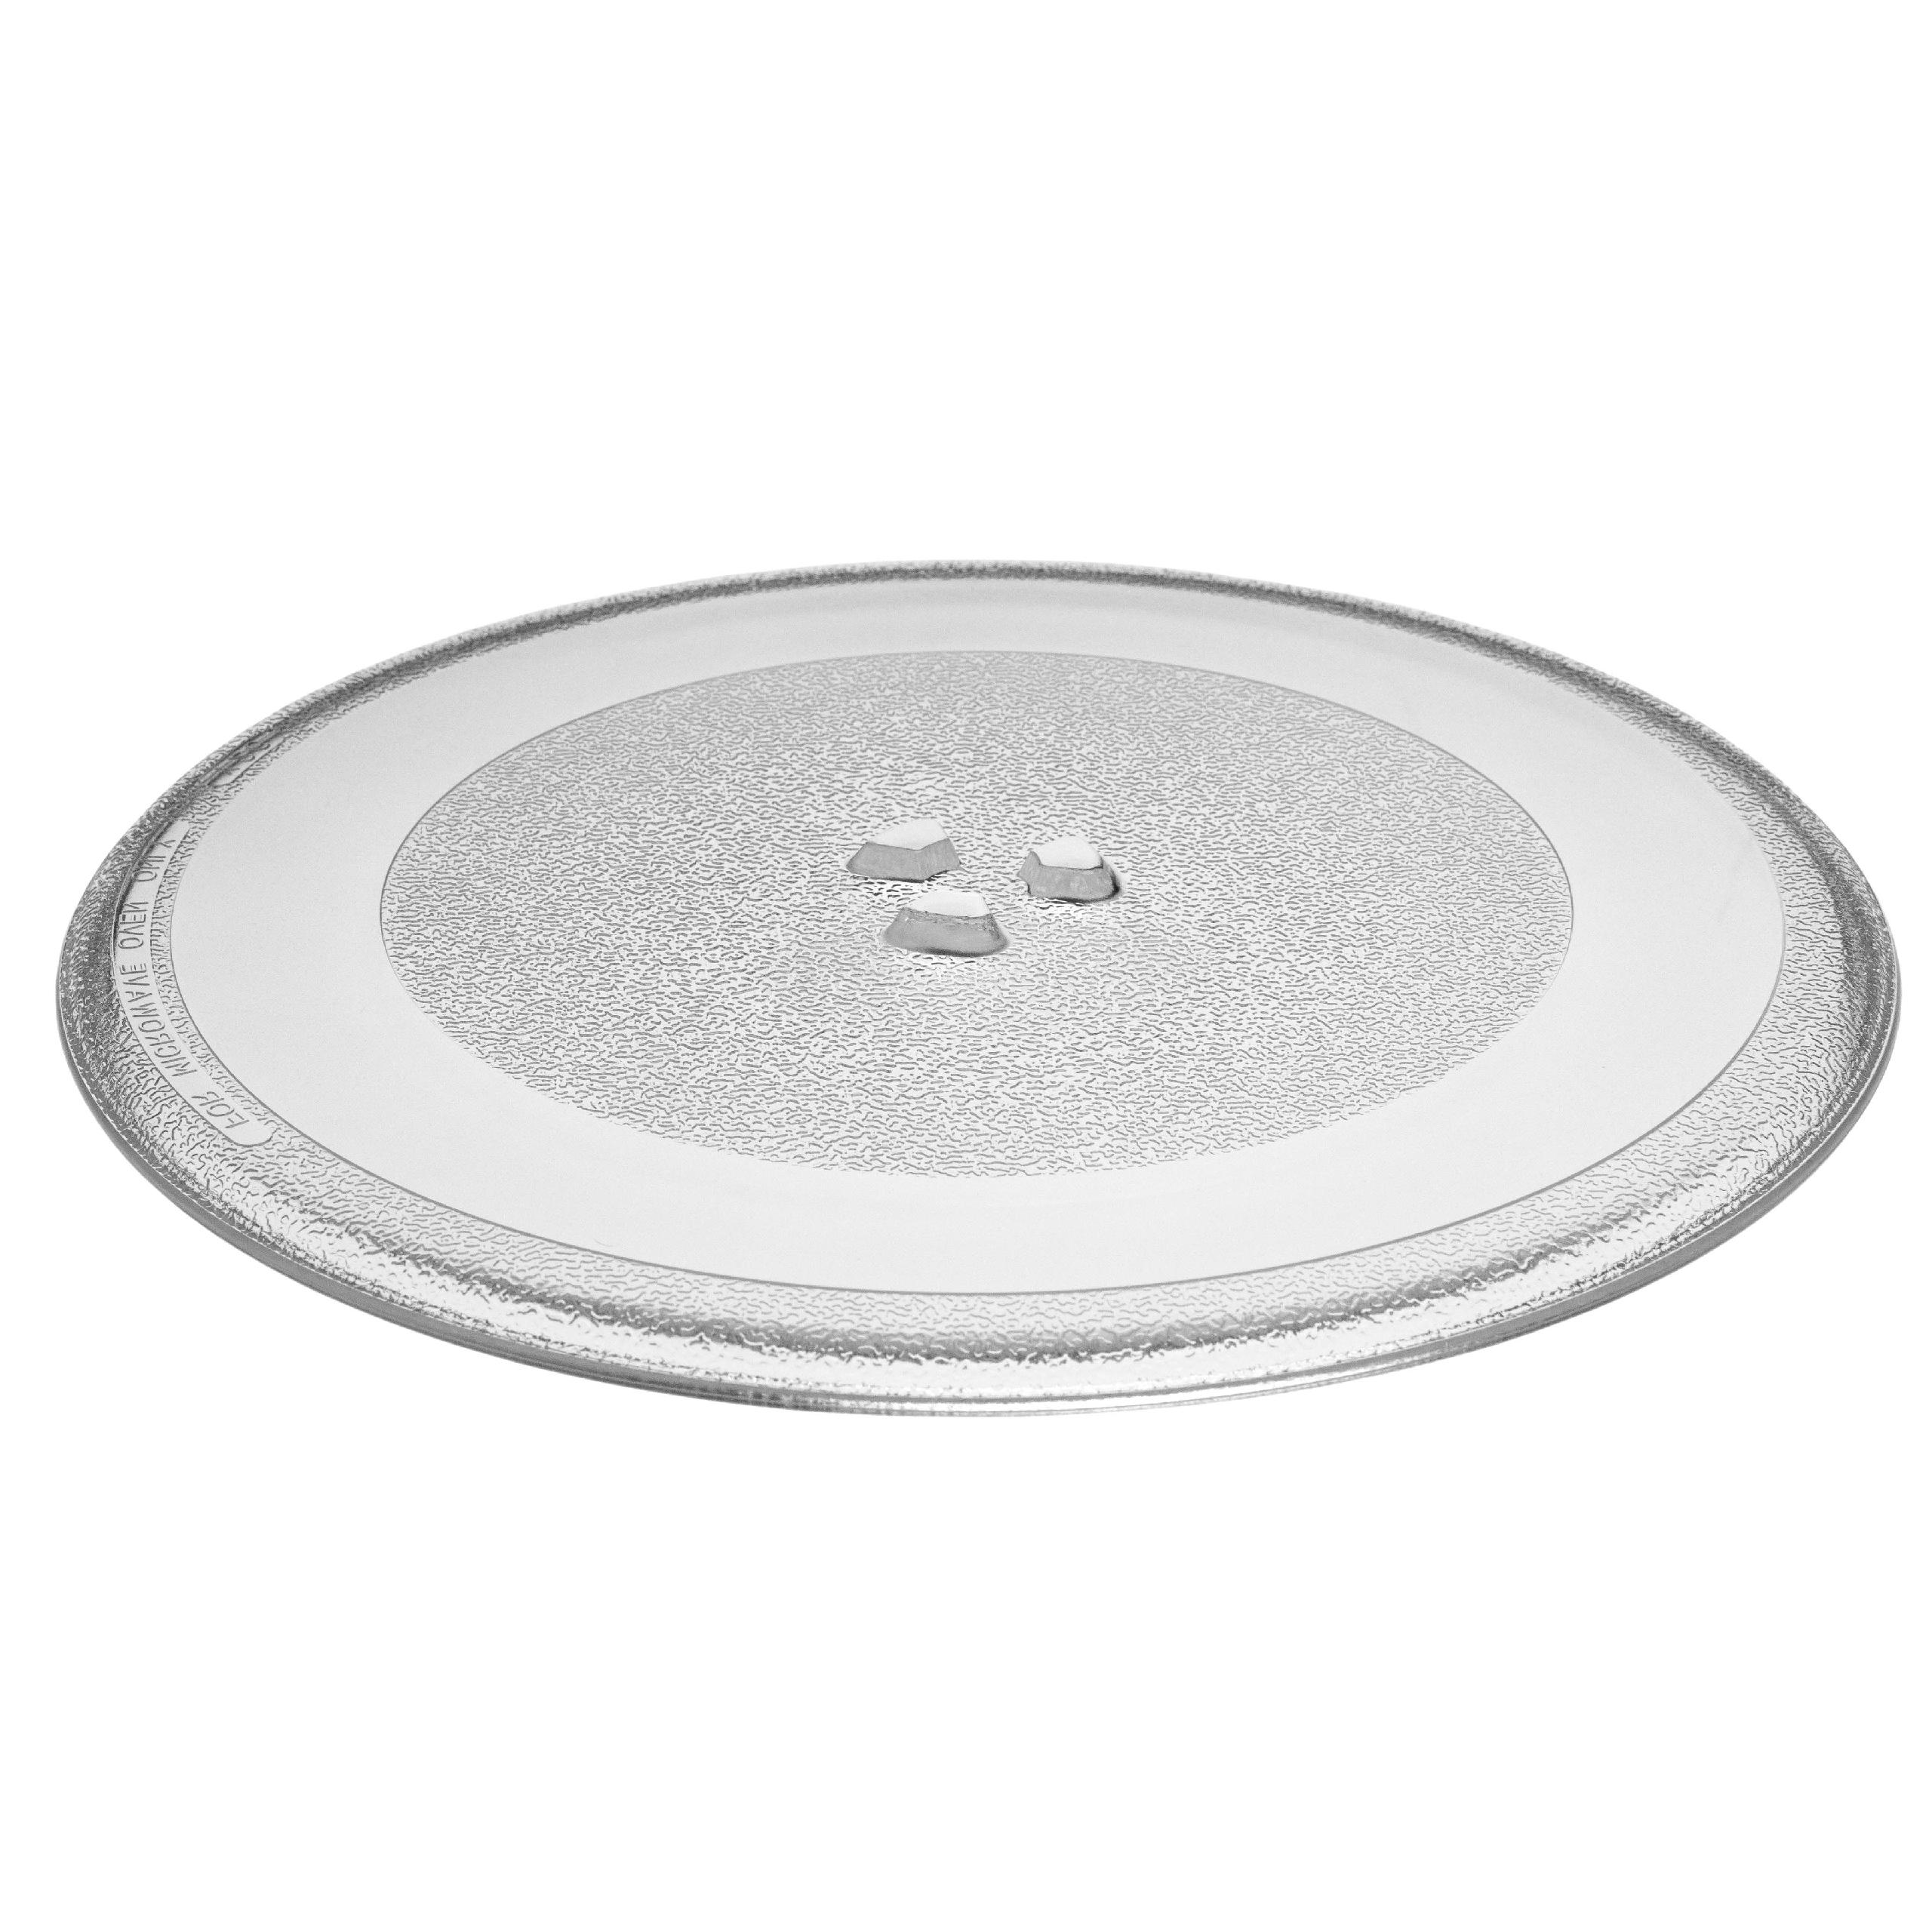 vidrio plato para microondas, plato giratorio de 32,4 cm para microondas Privileg etc.